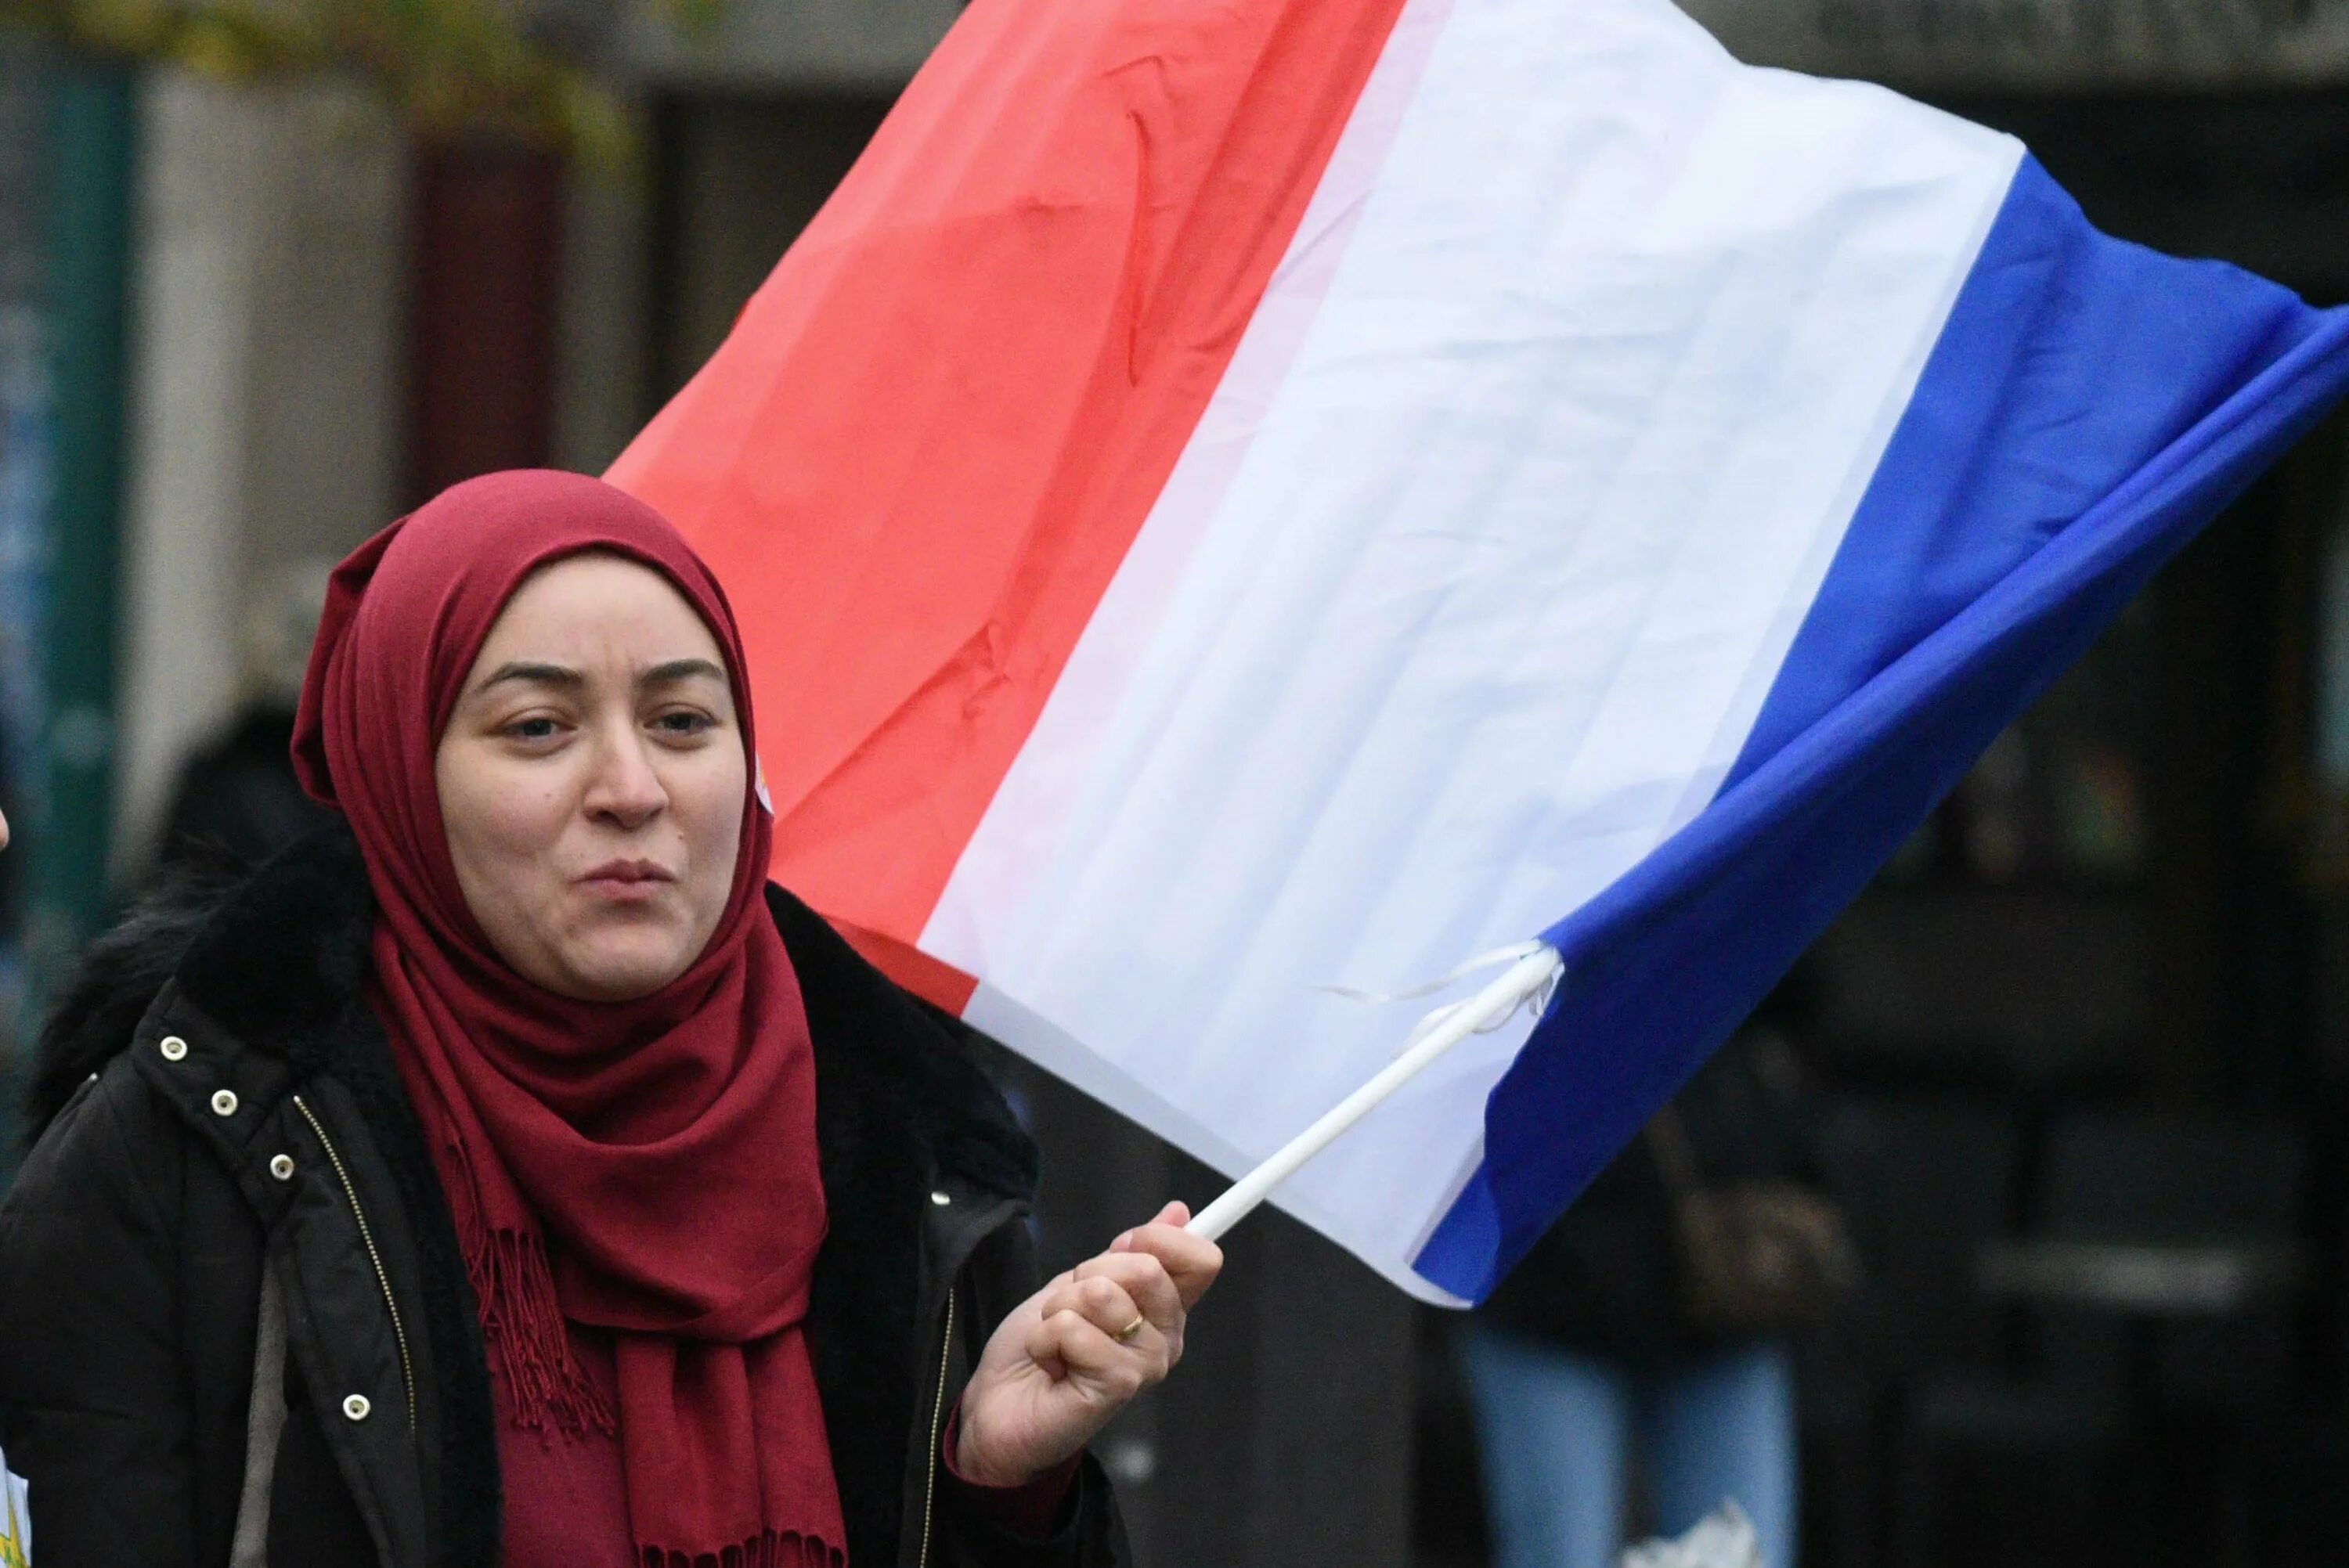 Мусульмане проблемы. Мусульмане во Франции. Исламофобия во Франции. Исламская Франция культура. Мусульмане во Франции проблемы.